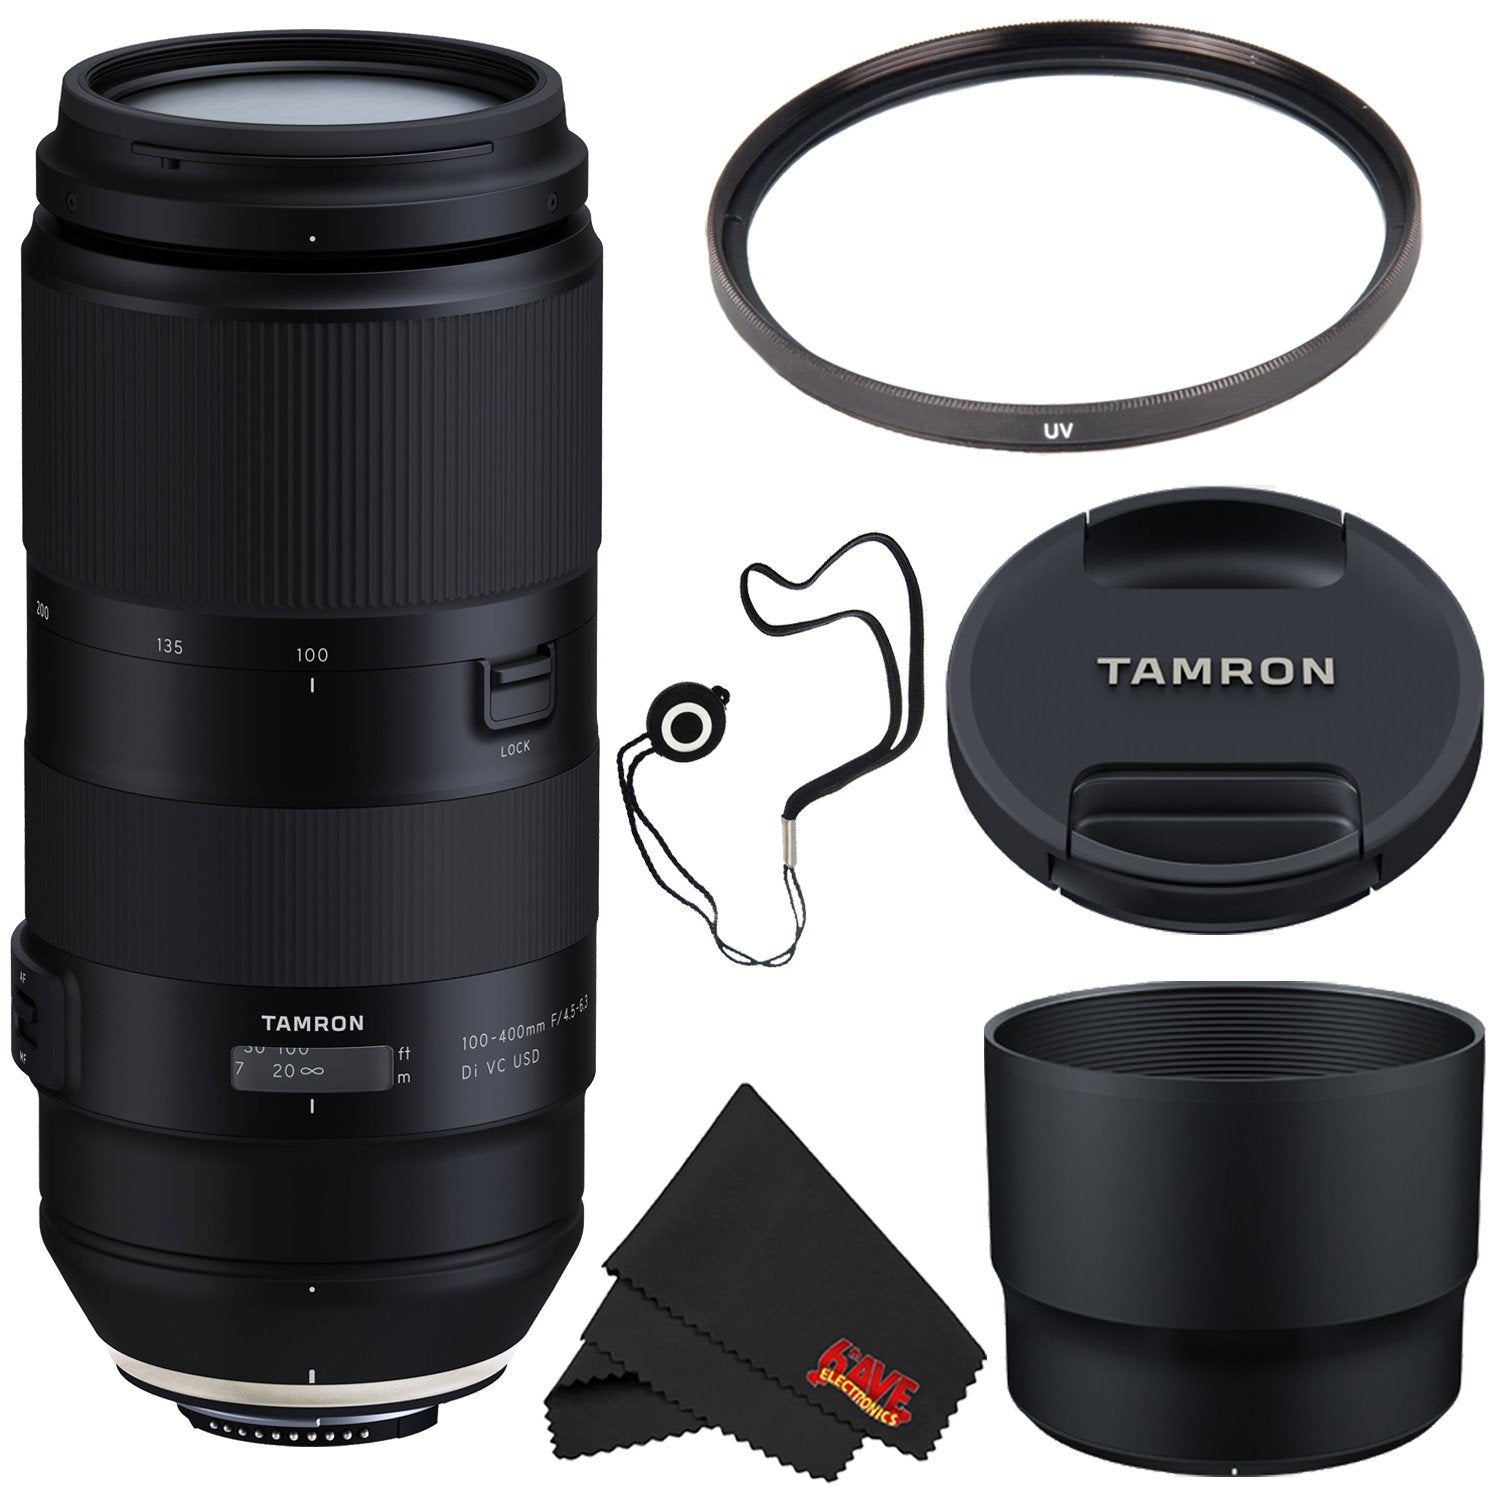 Tamron 100-400mm f/4.5-6.3 Di VC USD Lens for Nikon F AFA035N-700 (International Model) + 67mm UV Filter + Lens Cap Keep